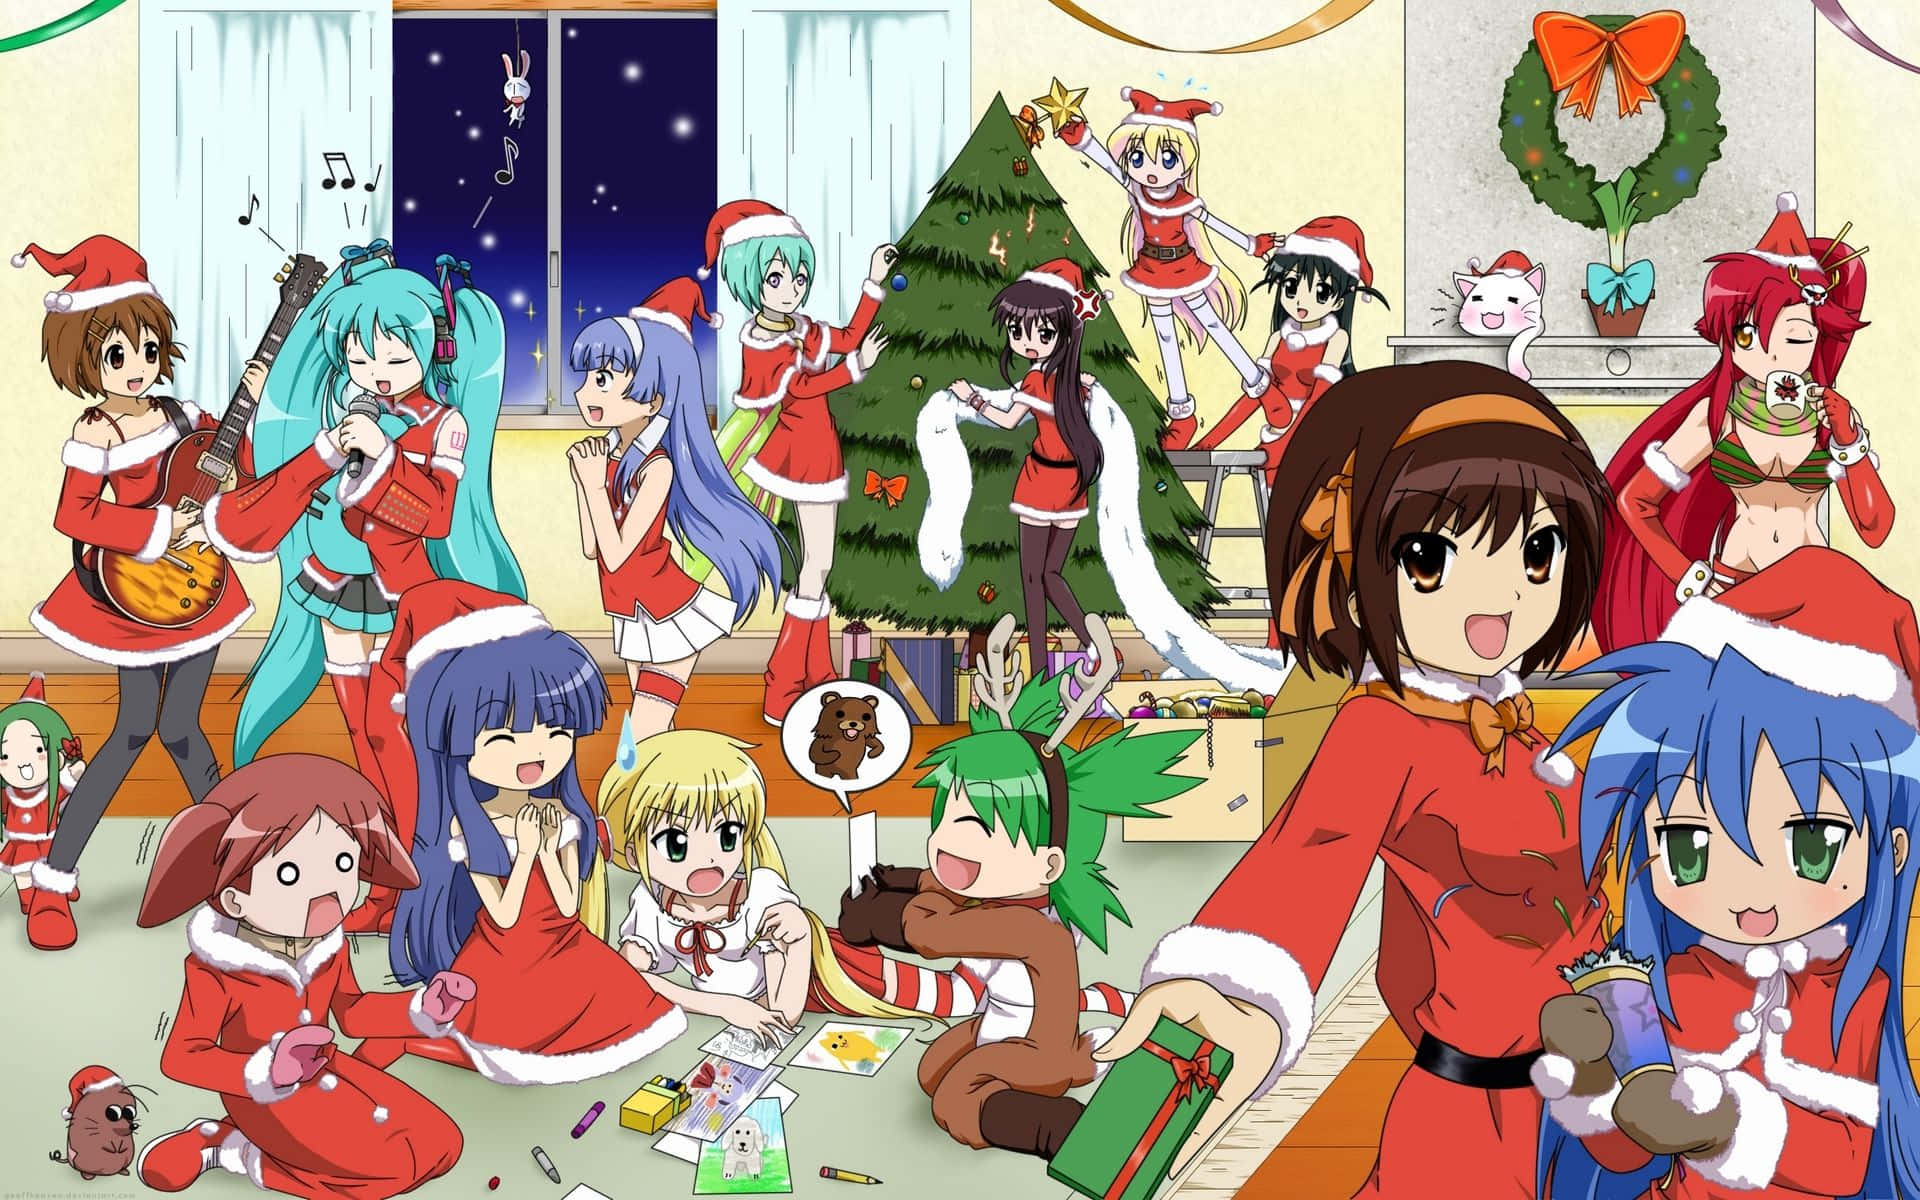 Celebrate Christmas anime style!